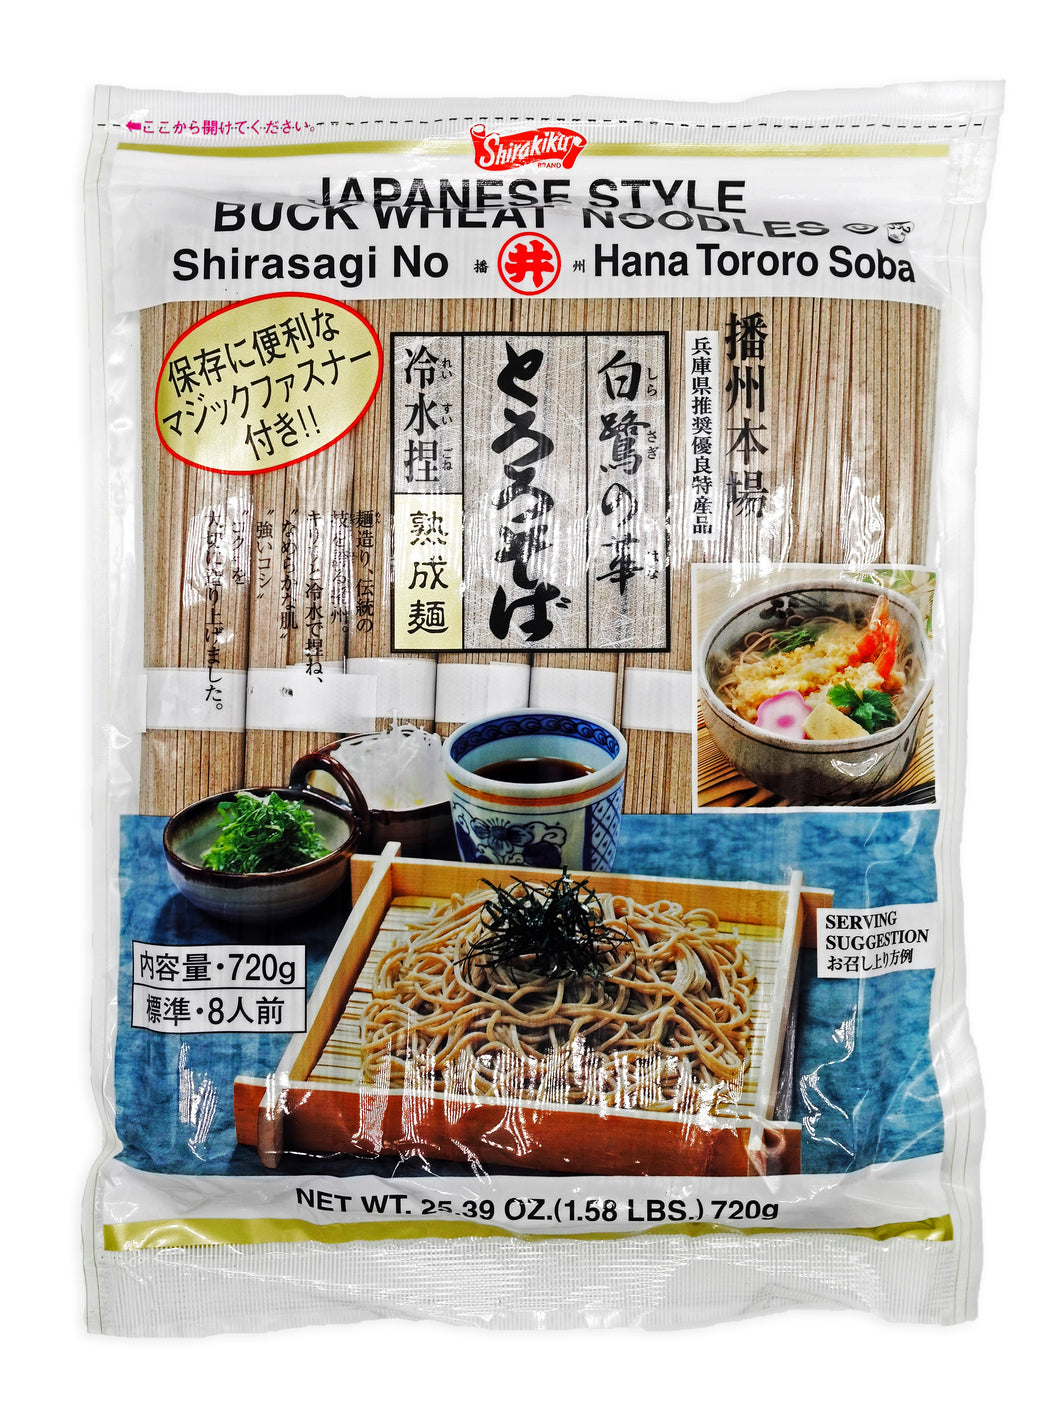 Shirakiku Japanese Style Buckwheat Noodles (Hana Tororo Soba)